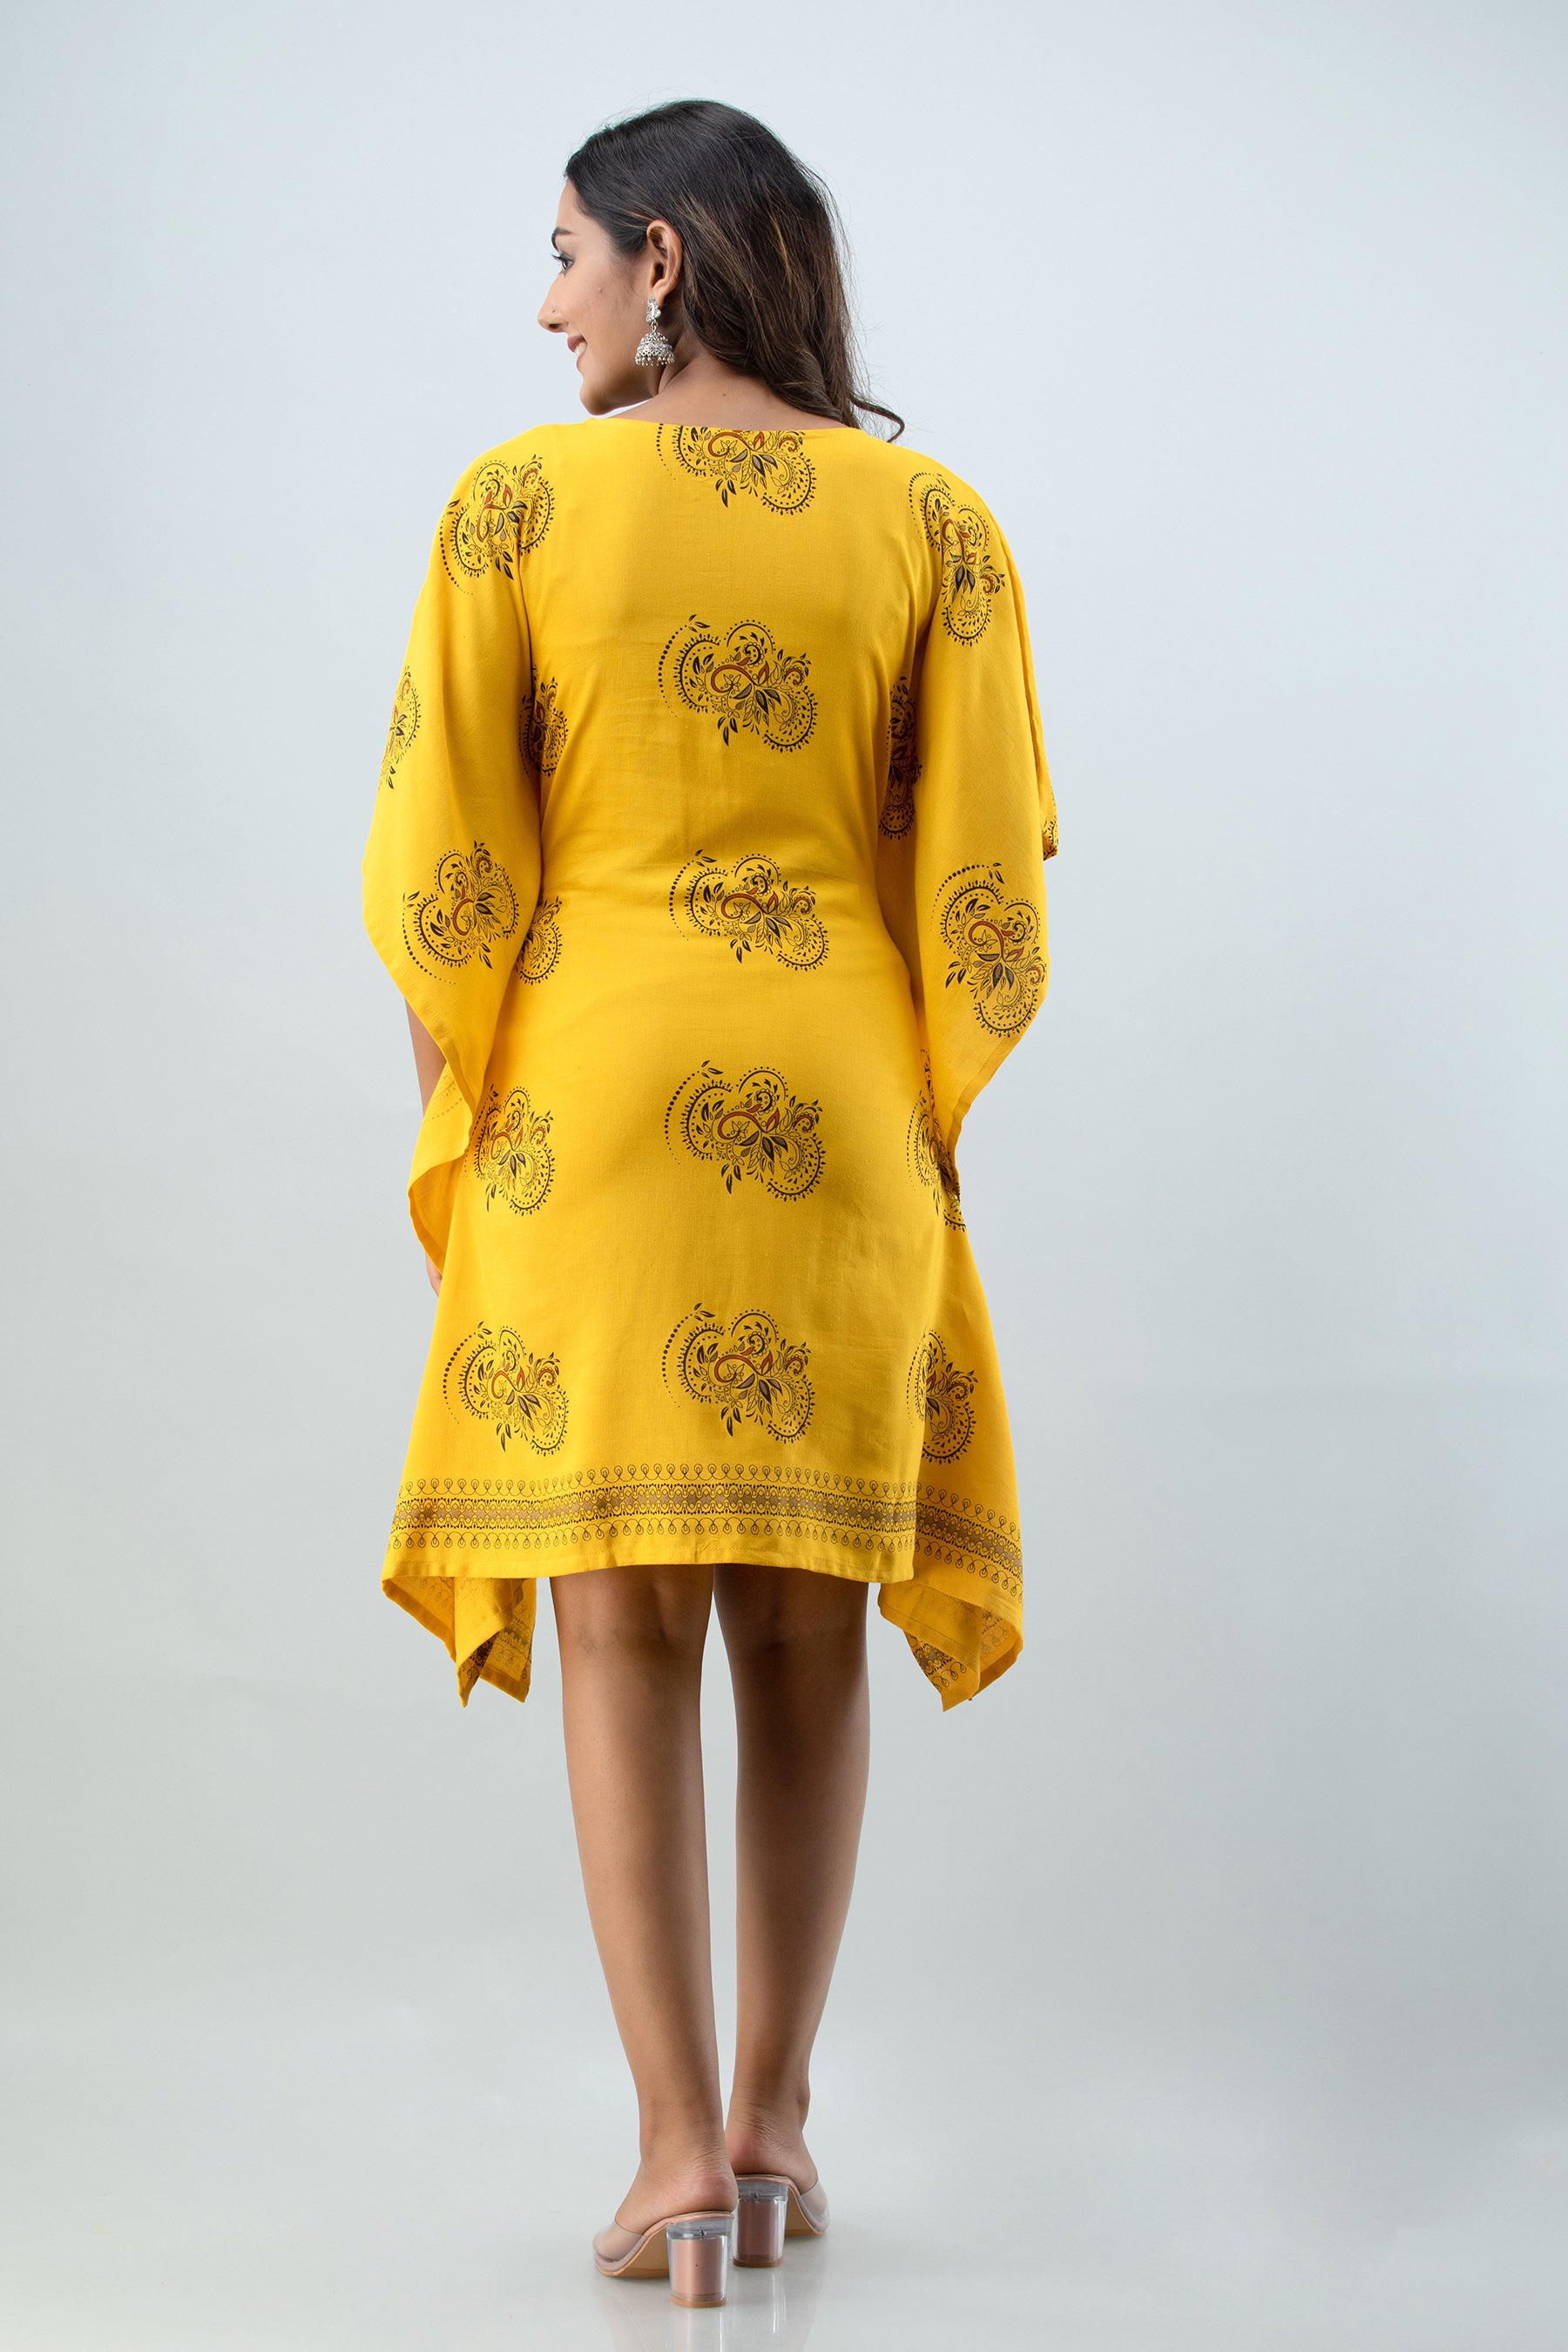 Women's Ethnic motif printed yellow kaftan top - MISSKURTI